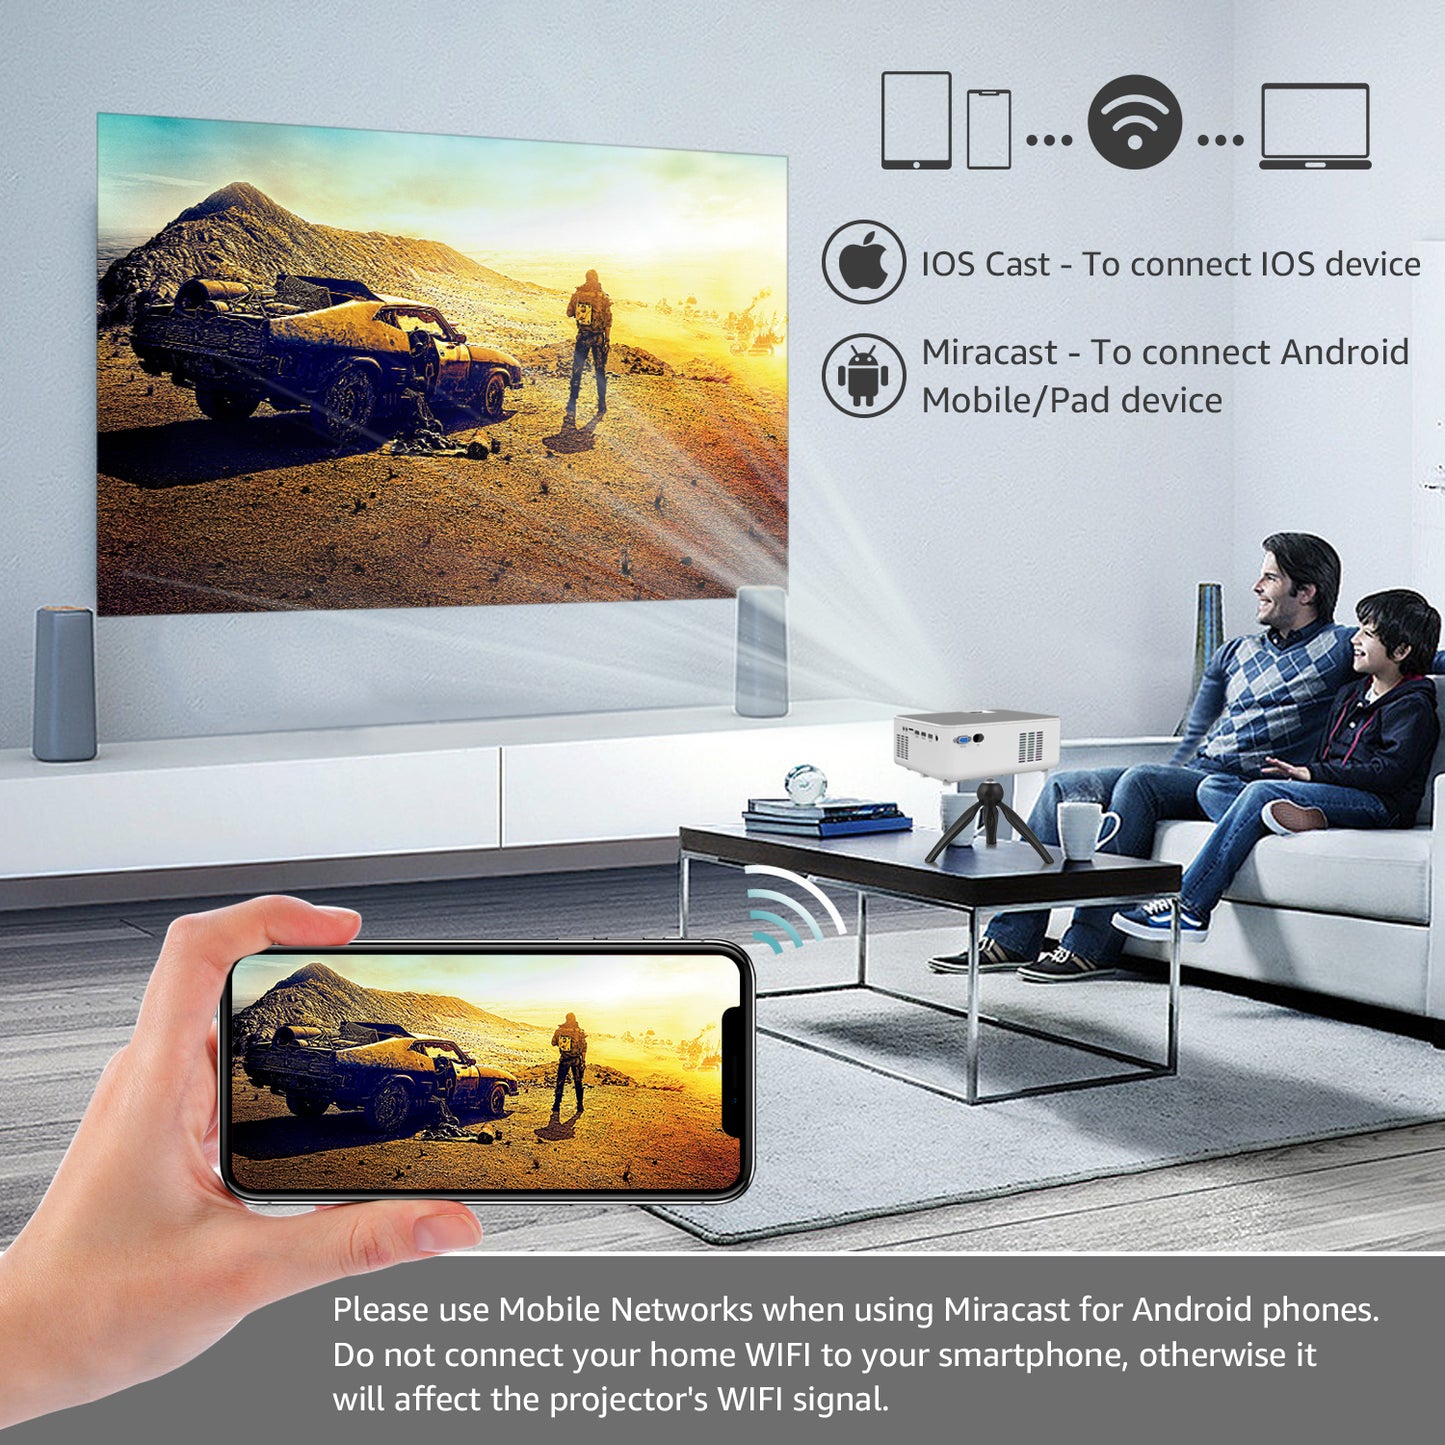 FANGOR 506 HD Projector,  1080P WiFi/Bluetooth(sell to JP)